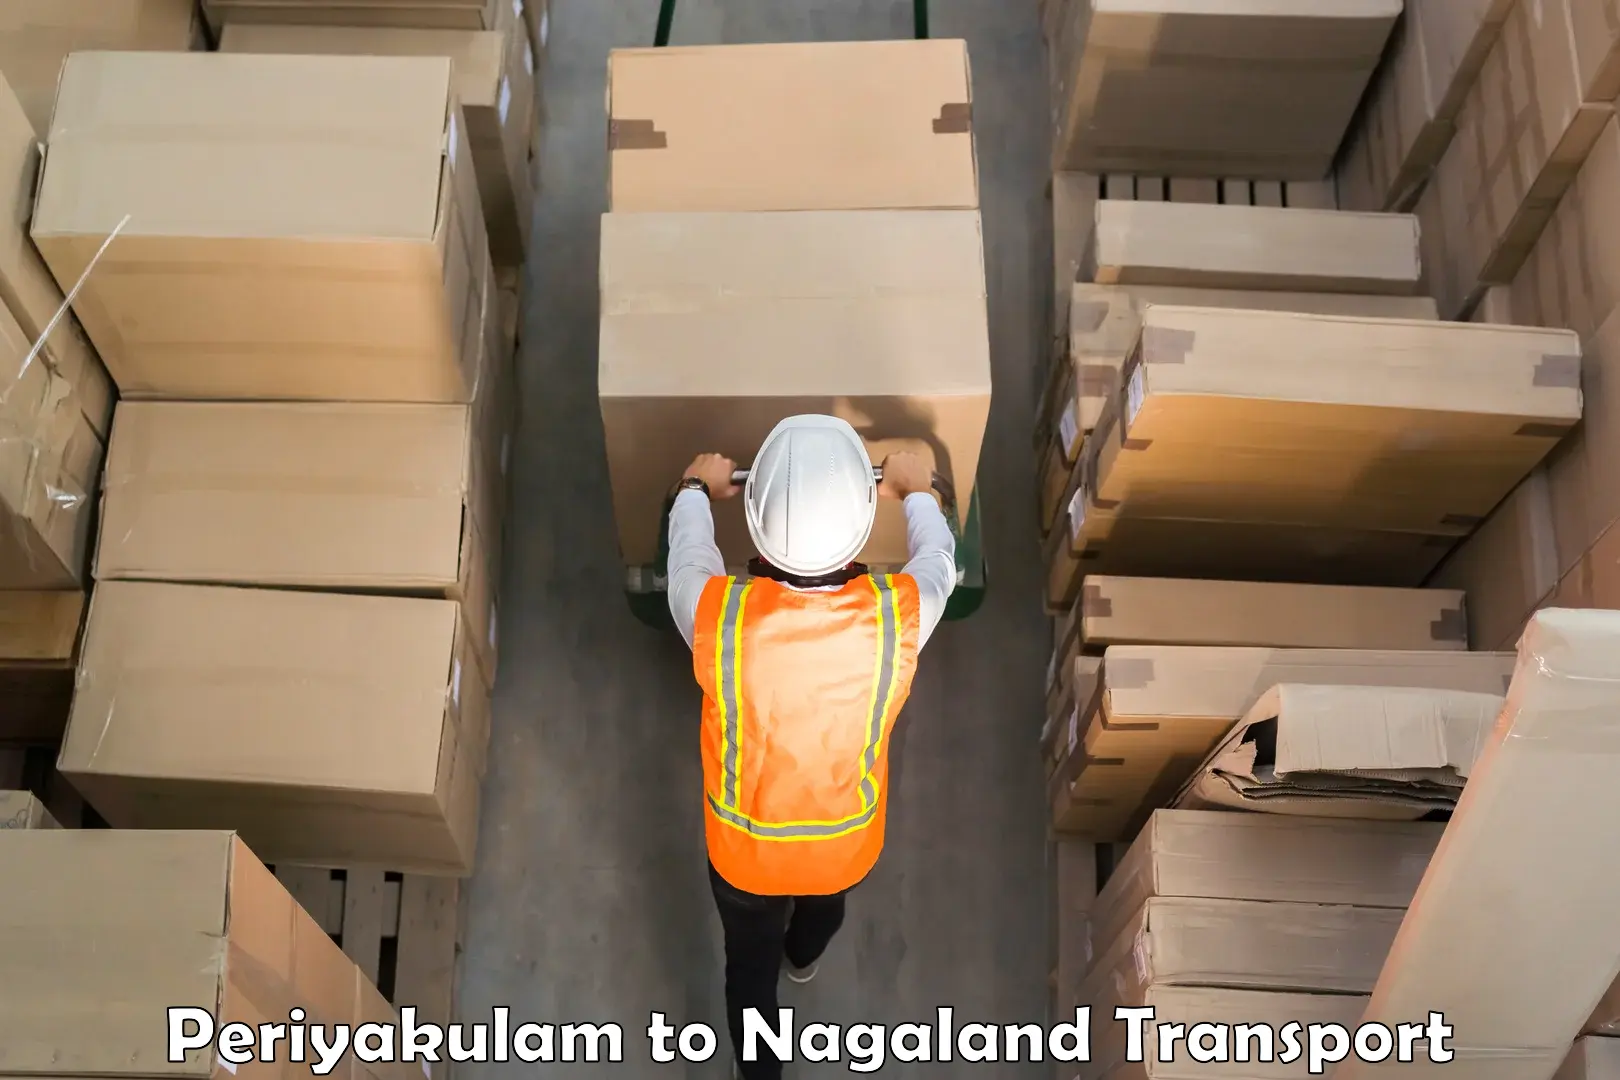 Truck transport companies in India Periyakulam to Nagaland